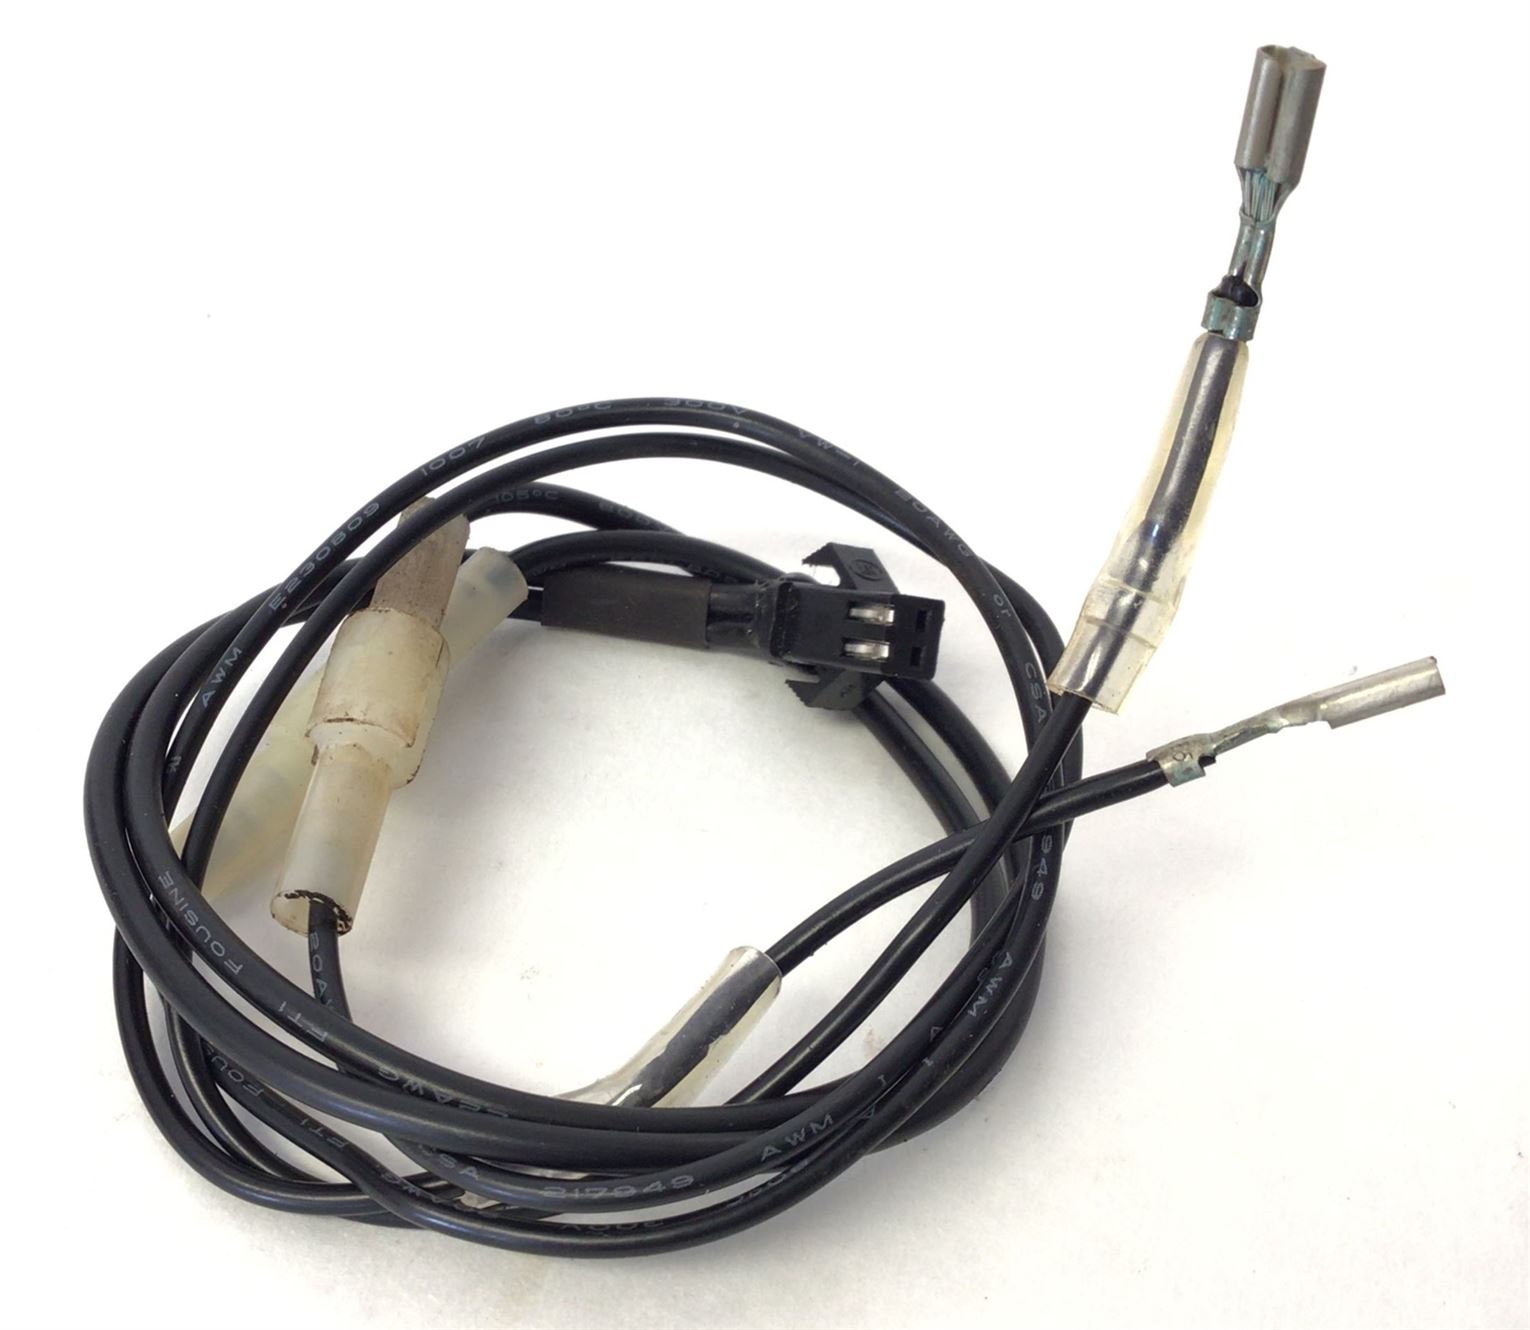 Elliptical Hand Sensor Pulse Wire Harness (Used)